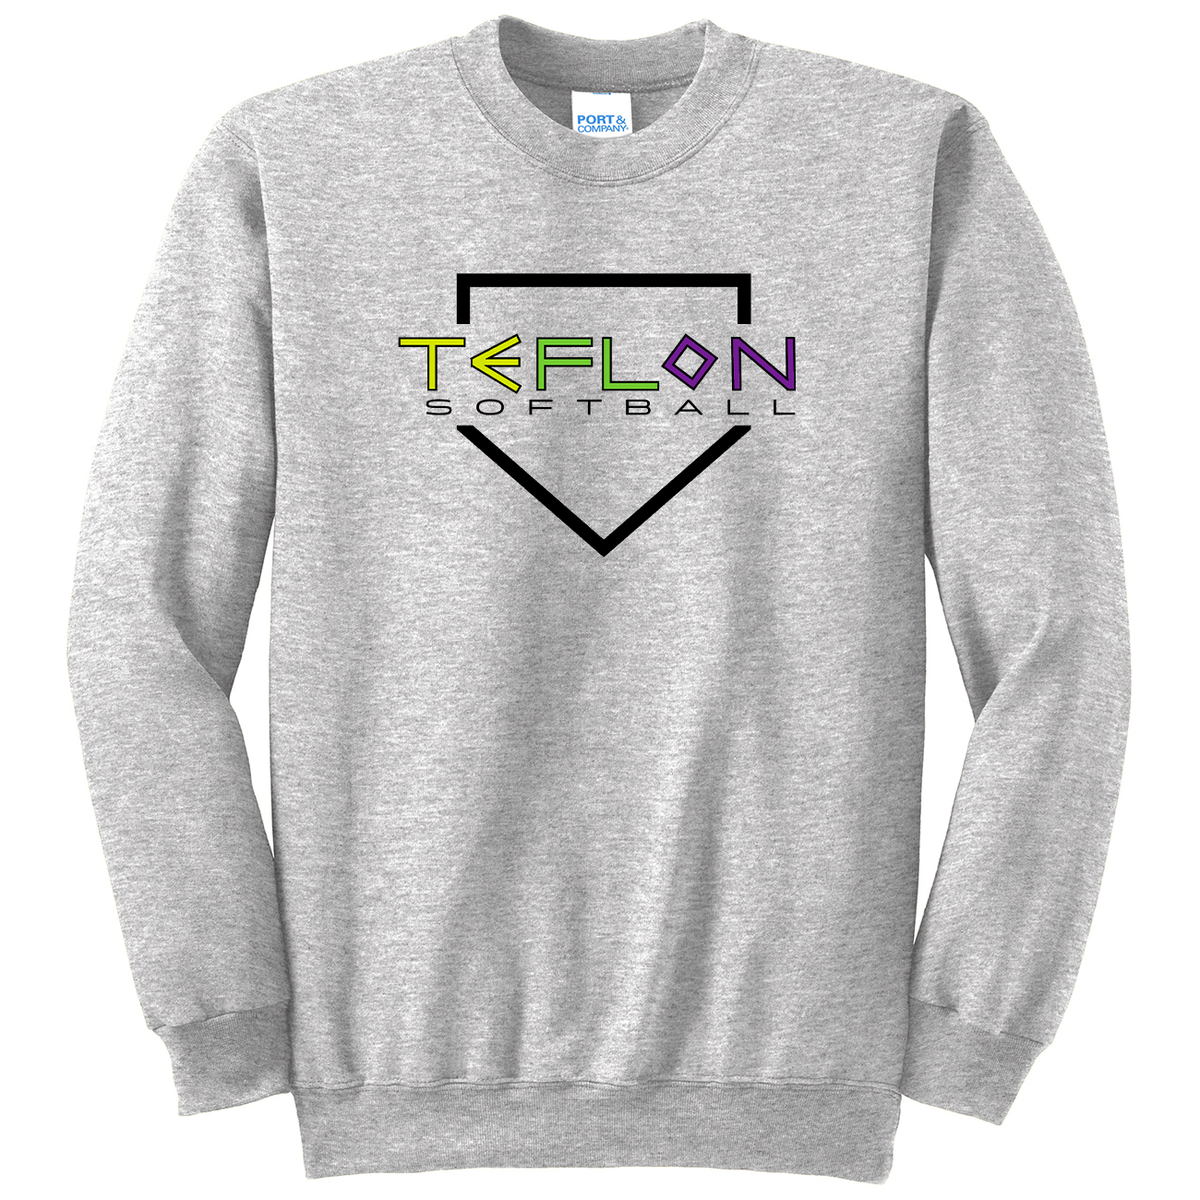 Team Teflon Softball Crew Neck Sweater